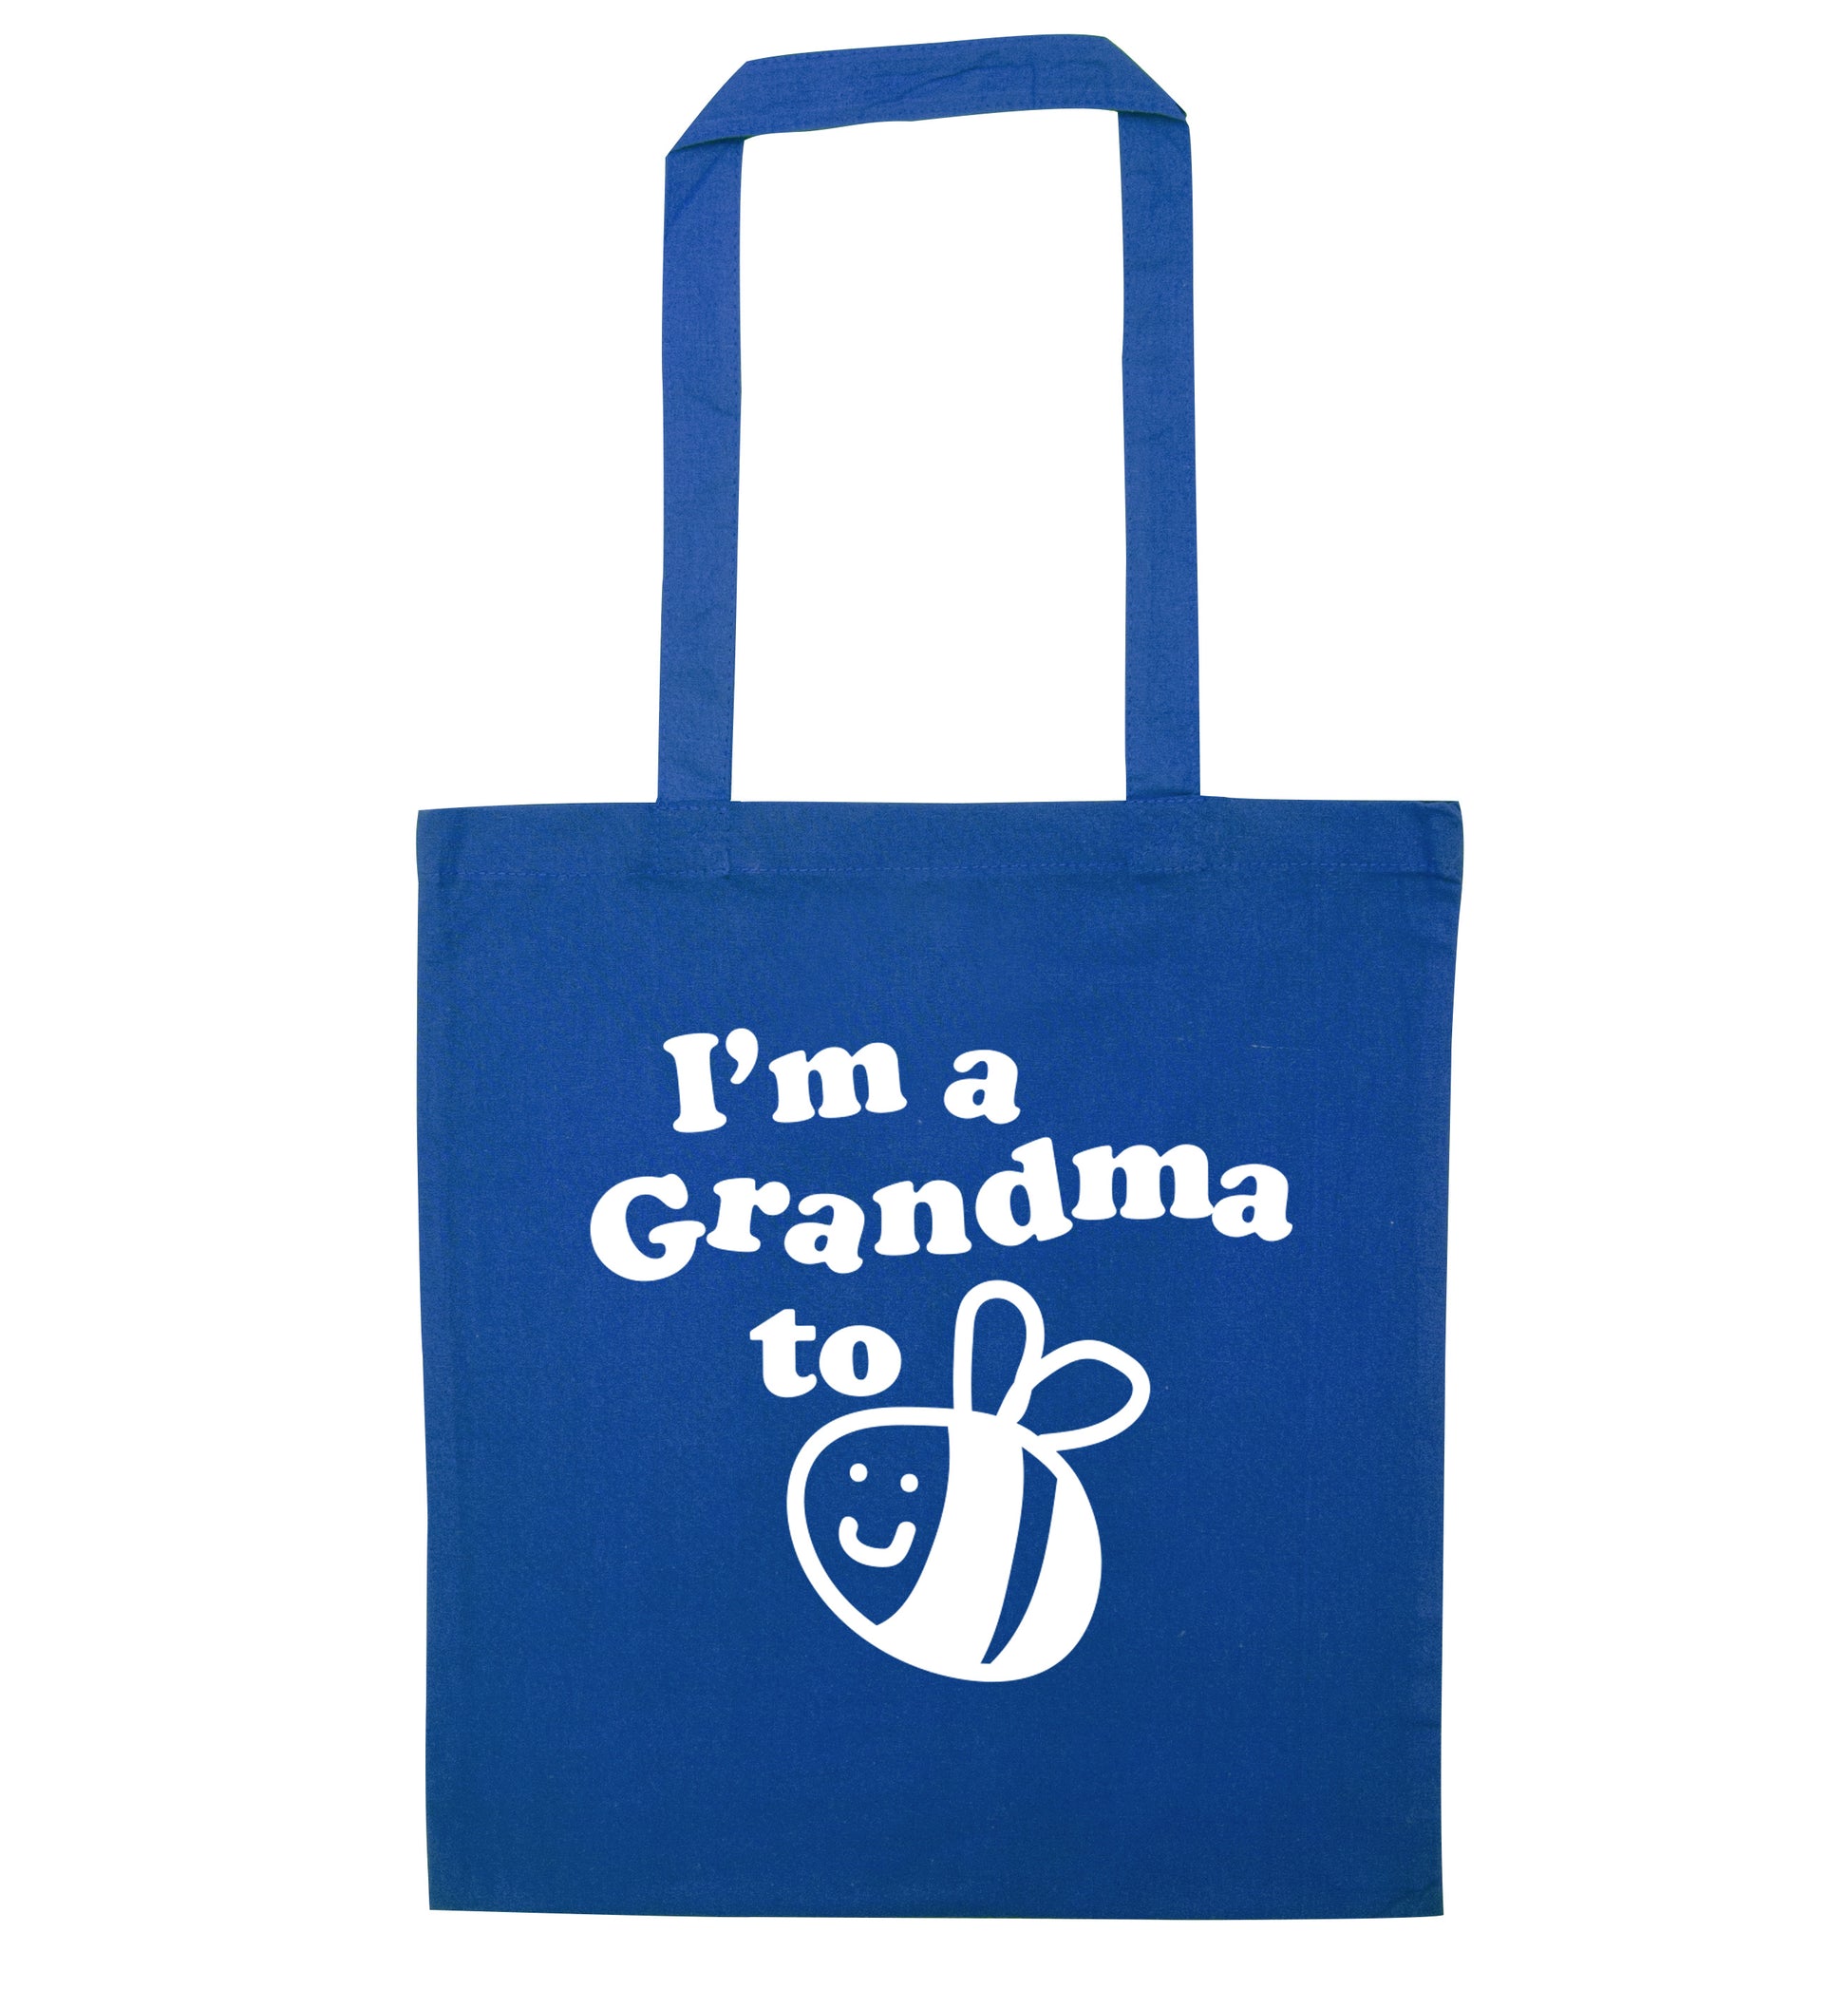 I'm a grandma to be blue tote bag